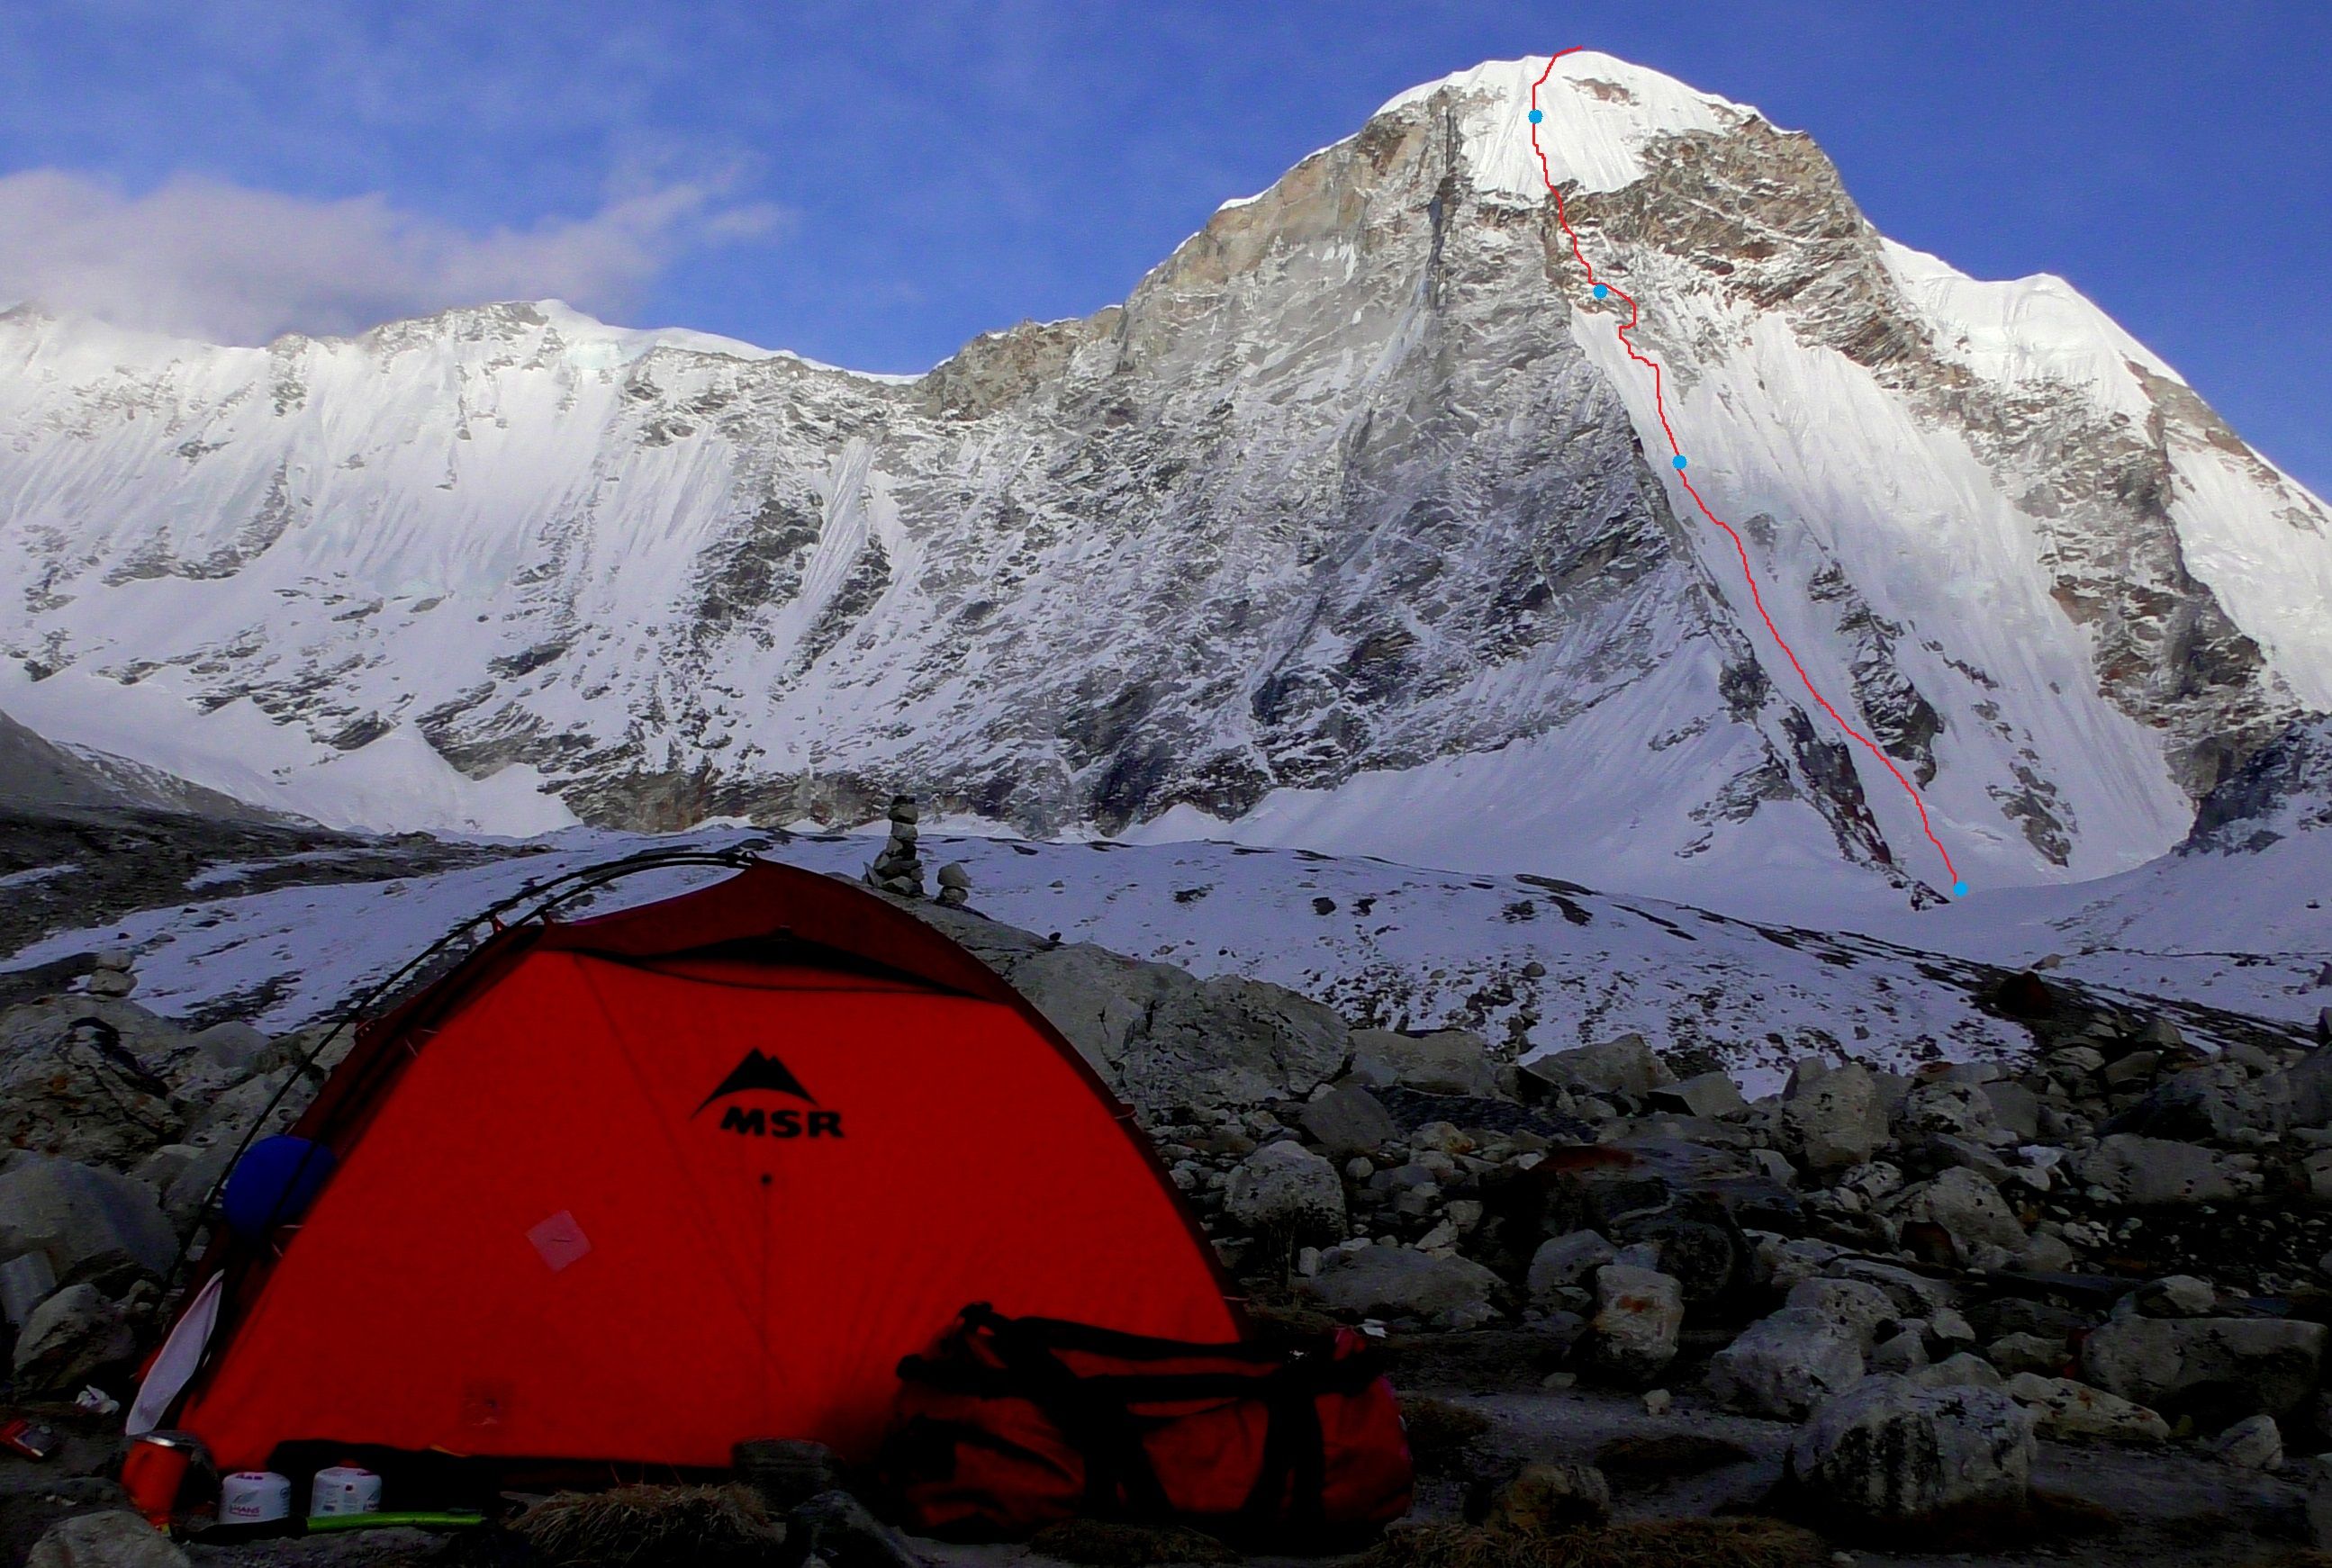 Basecamp at the bottom of the 1300m high northwest face. (Photo: Marek Holeček)